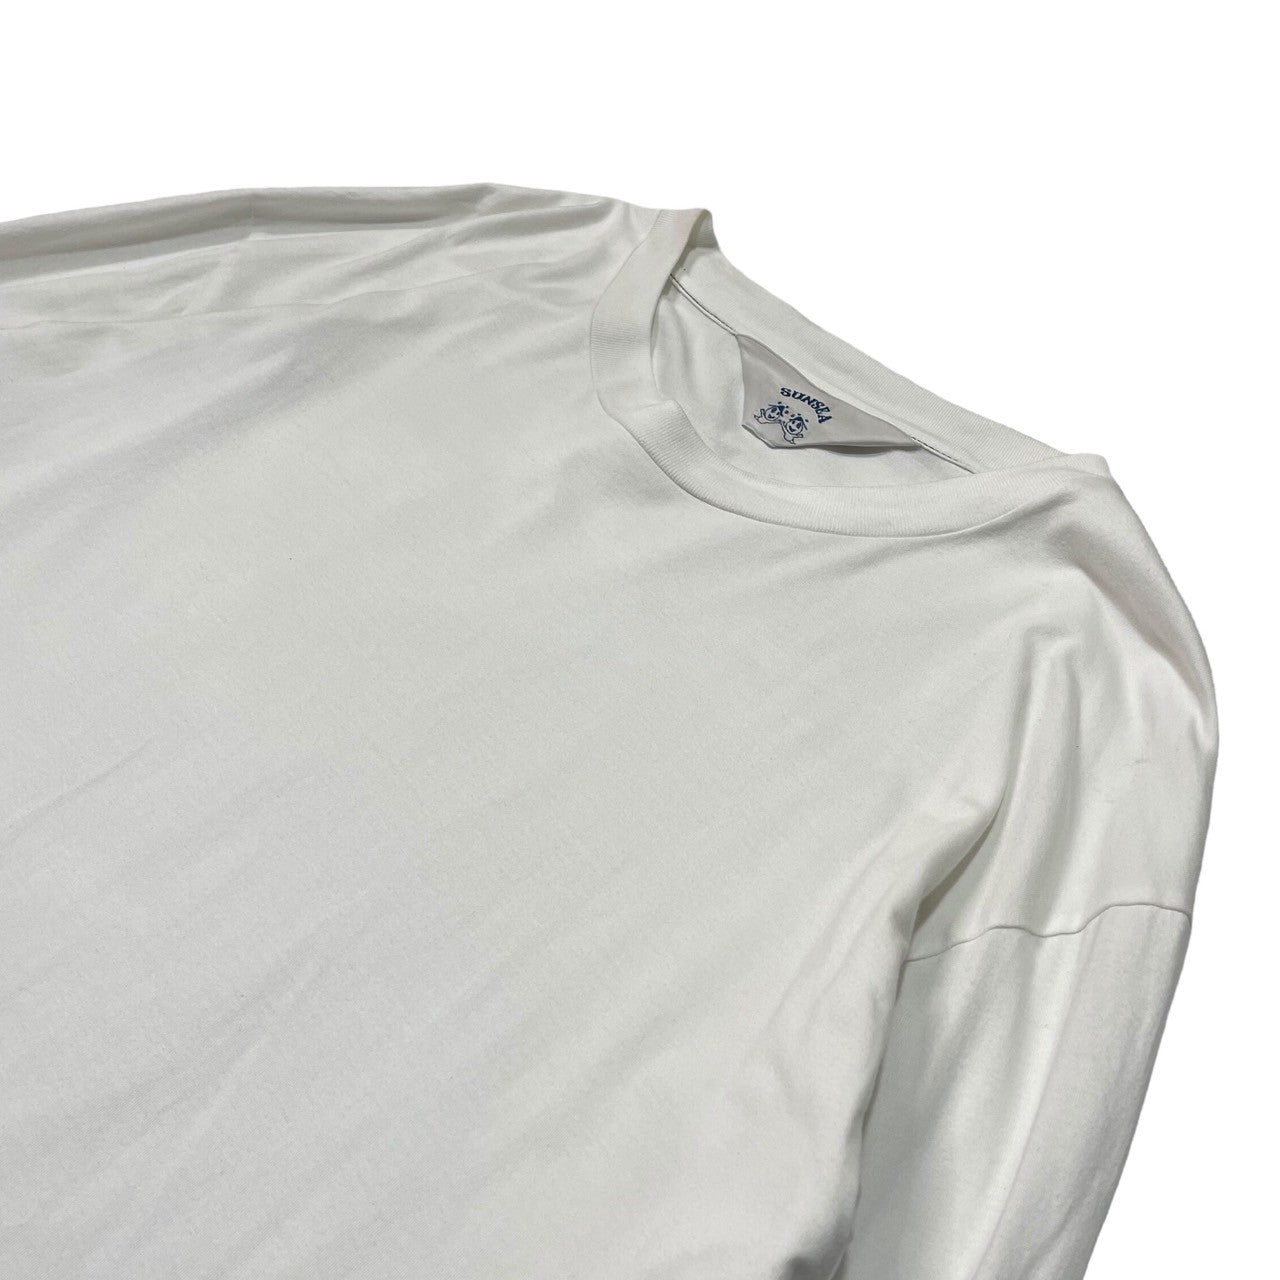 SUNSEA(サンシー) 21SS Shirt Long T-shirt シャツ ロングTシャツ ロンT 21S02 SIZE 3(L) ホワイト